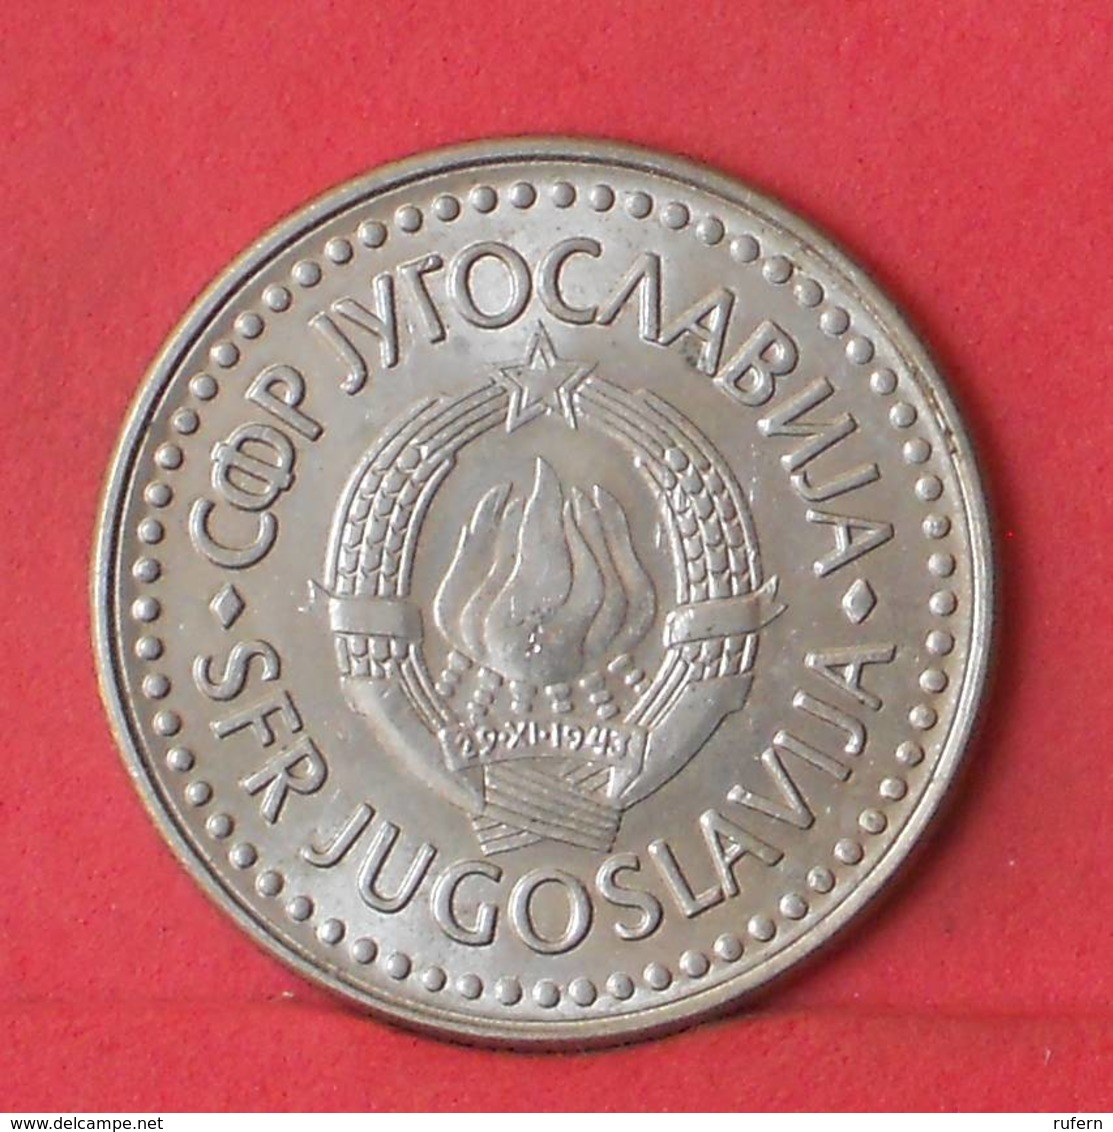 YUGOSLAVIA 100 DINARA 1988 -    KM# 114 - (Nº35543) - Yugoslavia